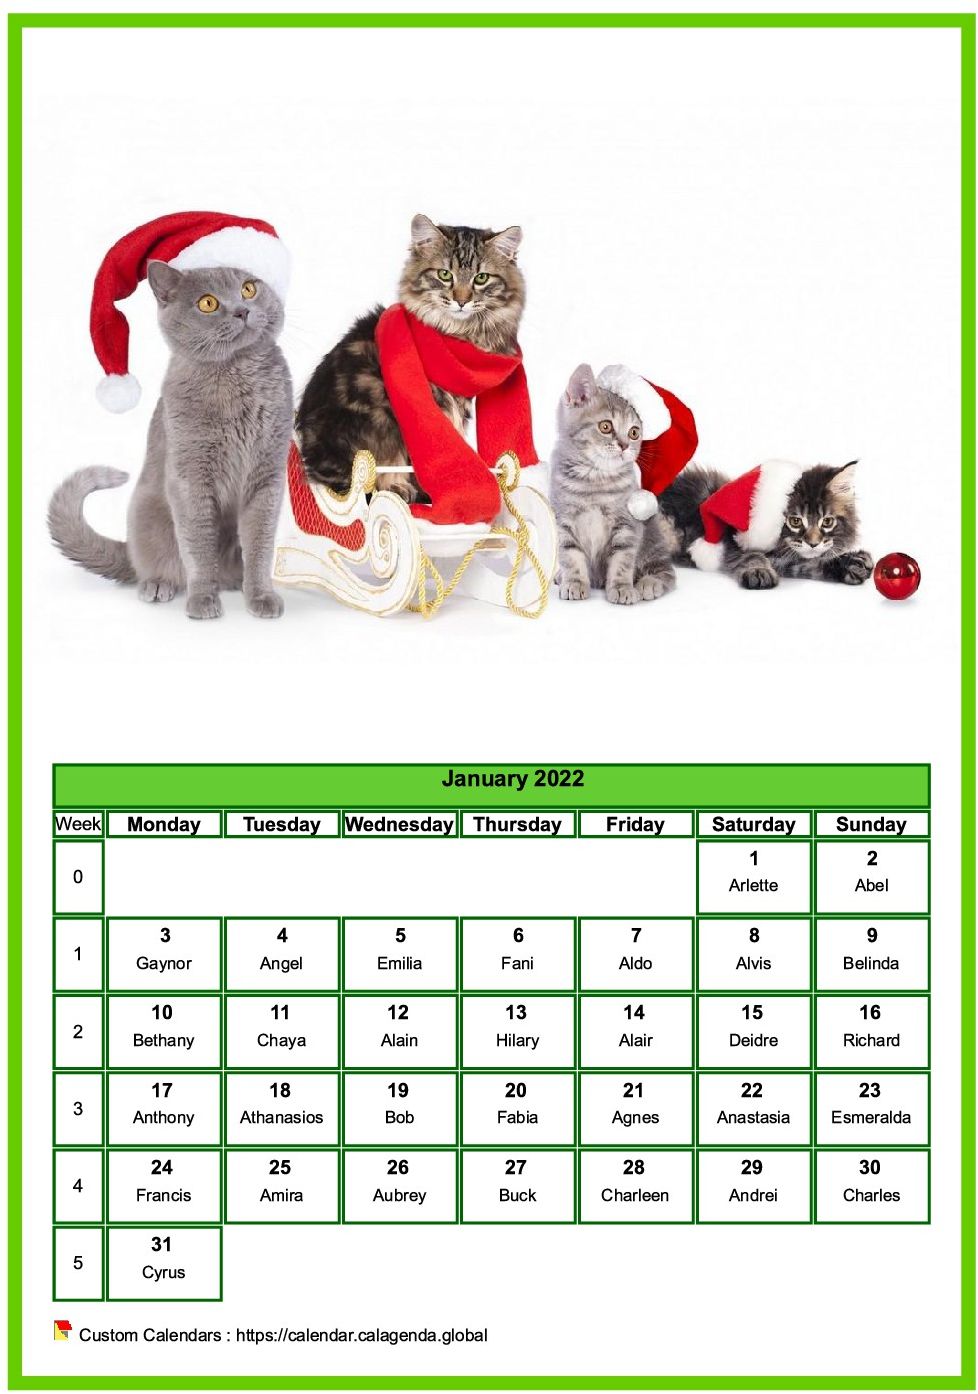 Calendar January 2022 cats